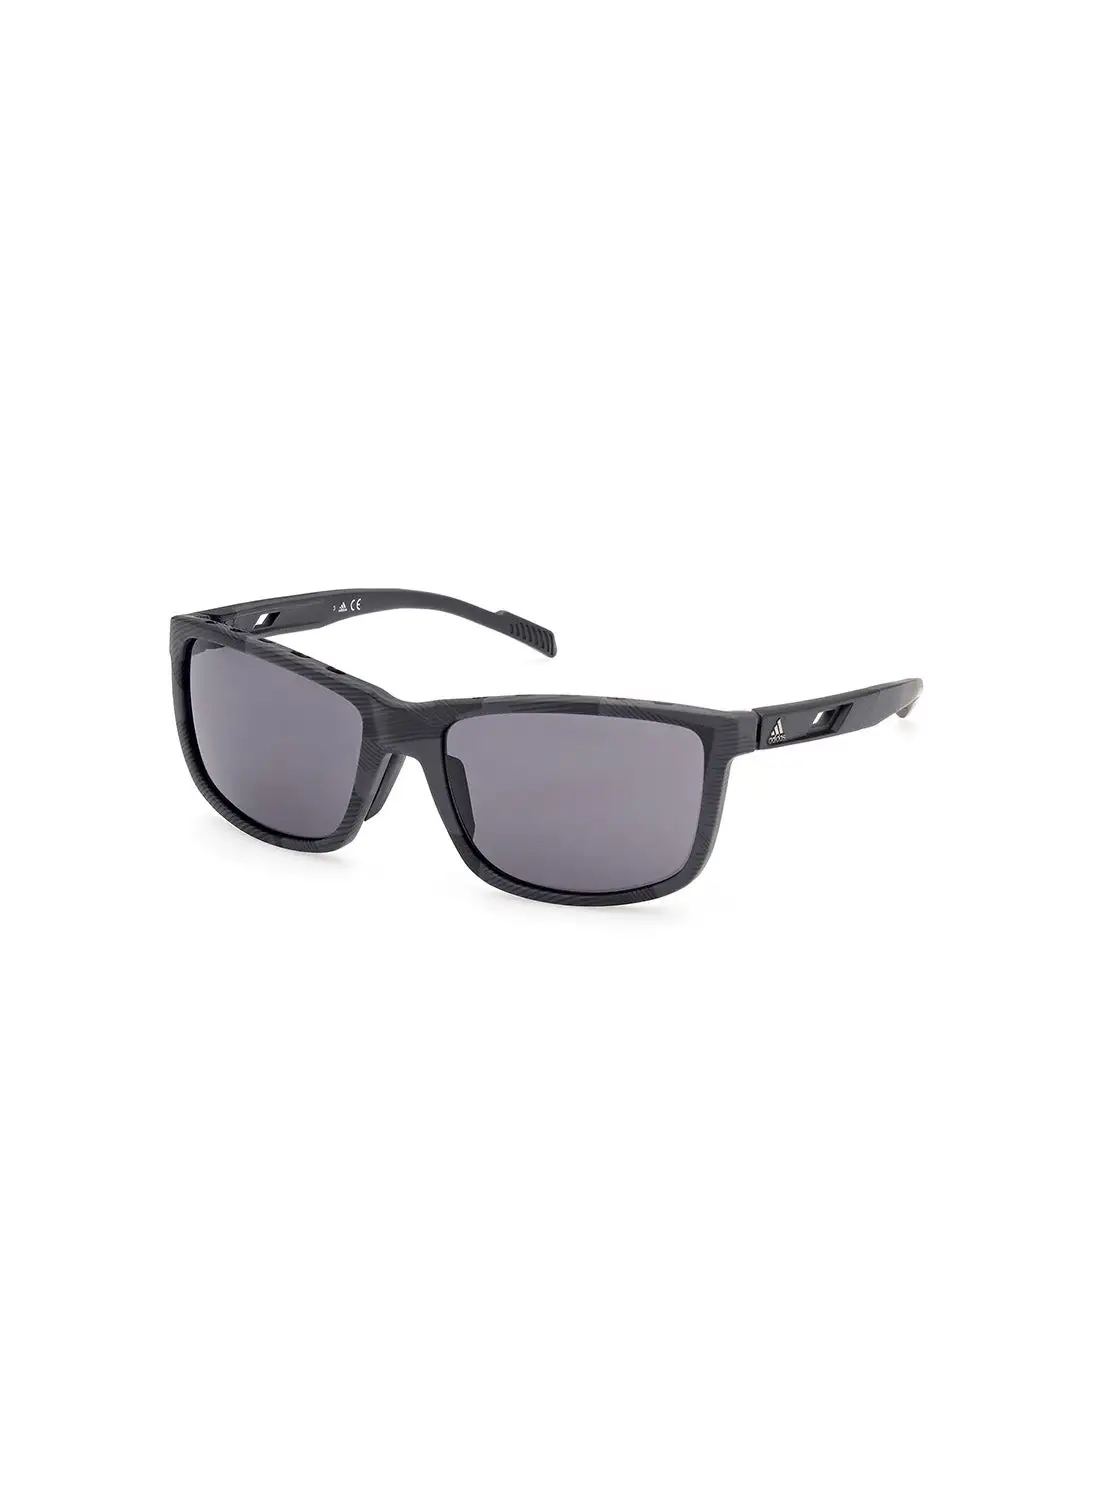 Adidas Men's UV Protection Navigator Sunglasses - SP004705A60 - Lens Size: 60 Mm